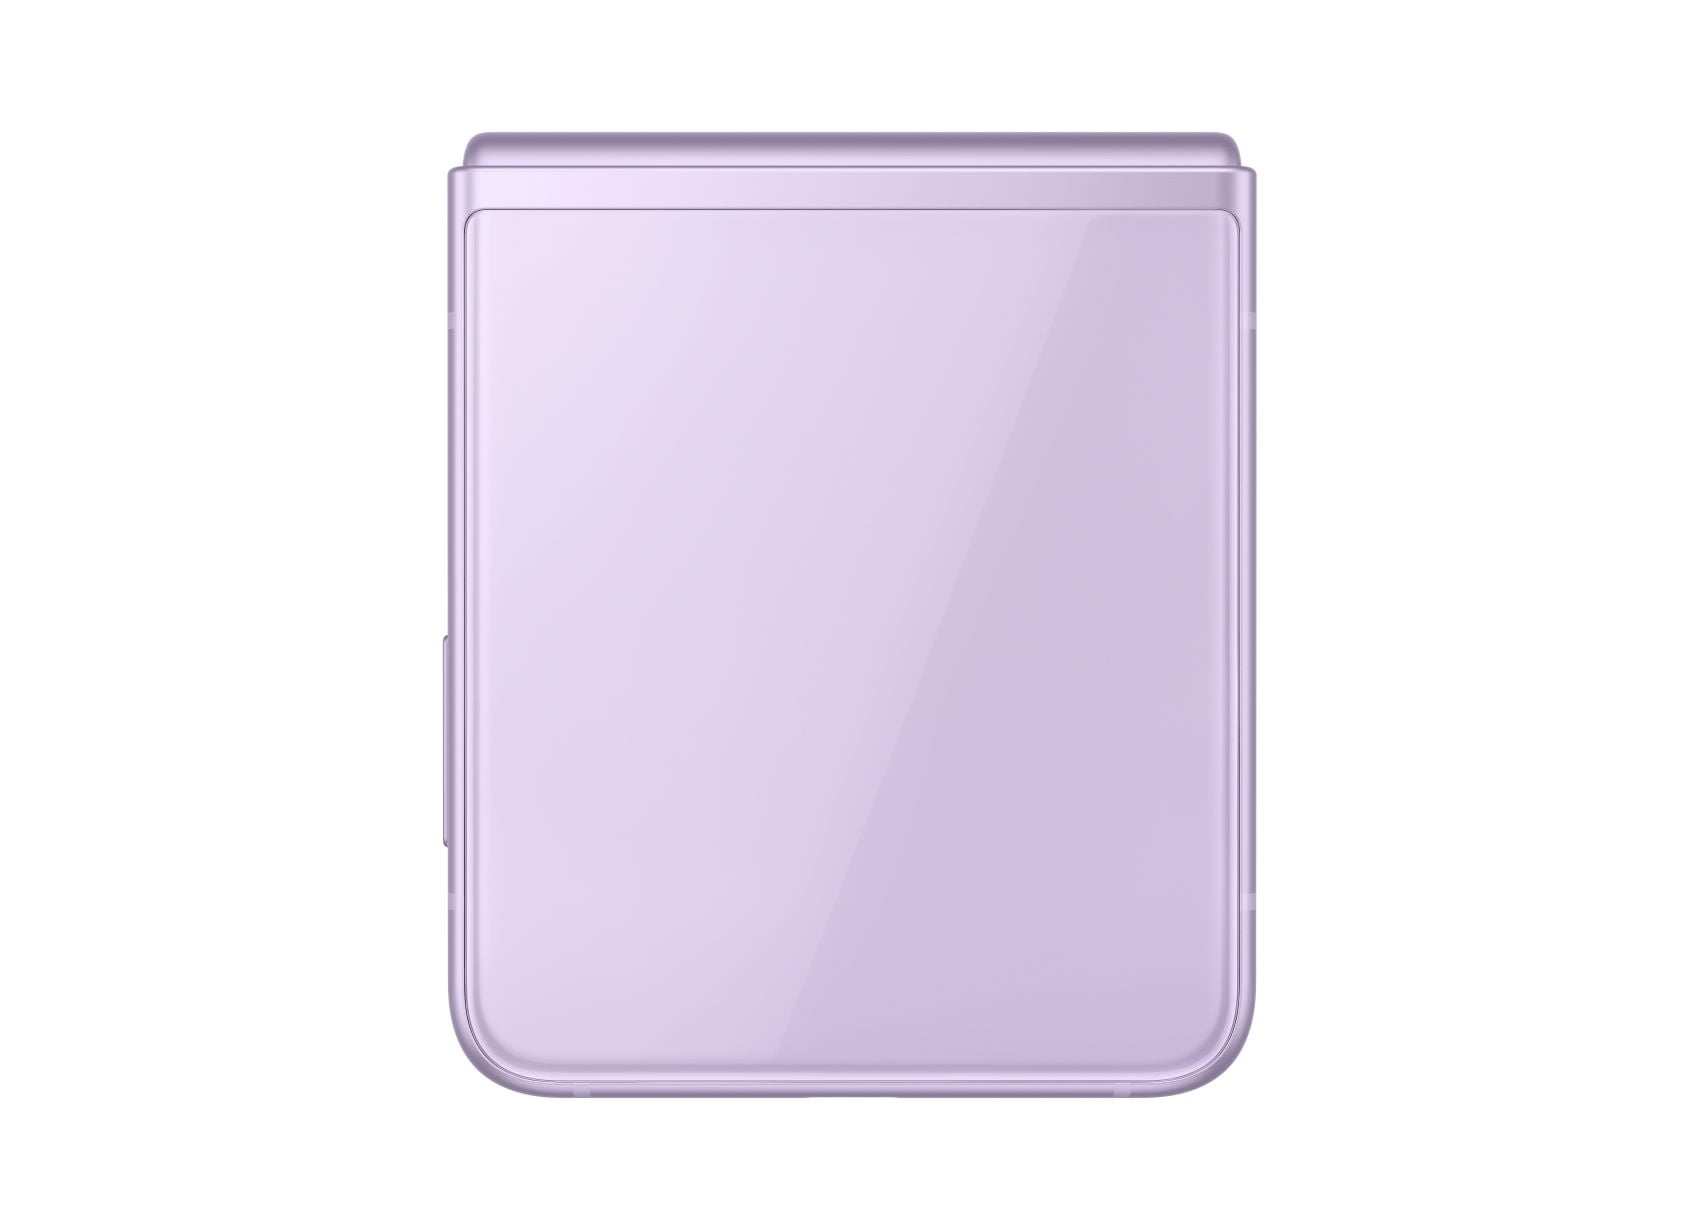 VZ Samsung Galaxy Z Flip3 5G, Lavender, 128GB - Walmart.com